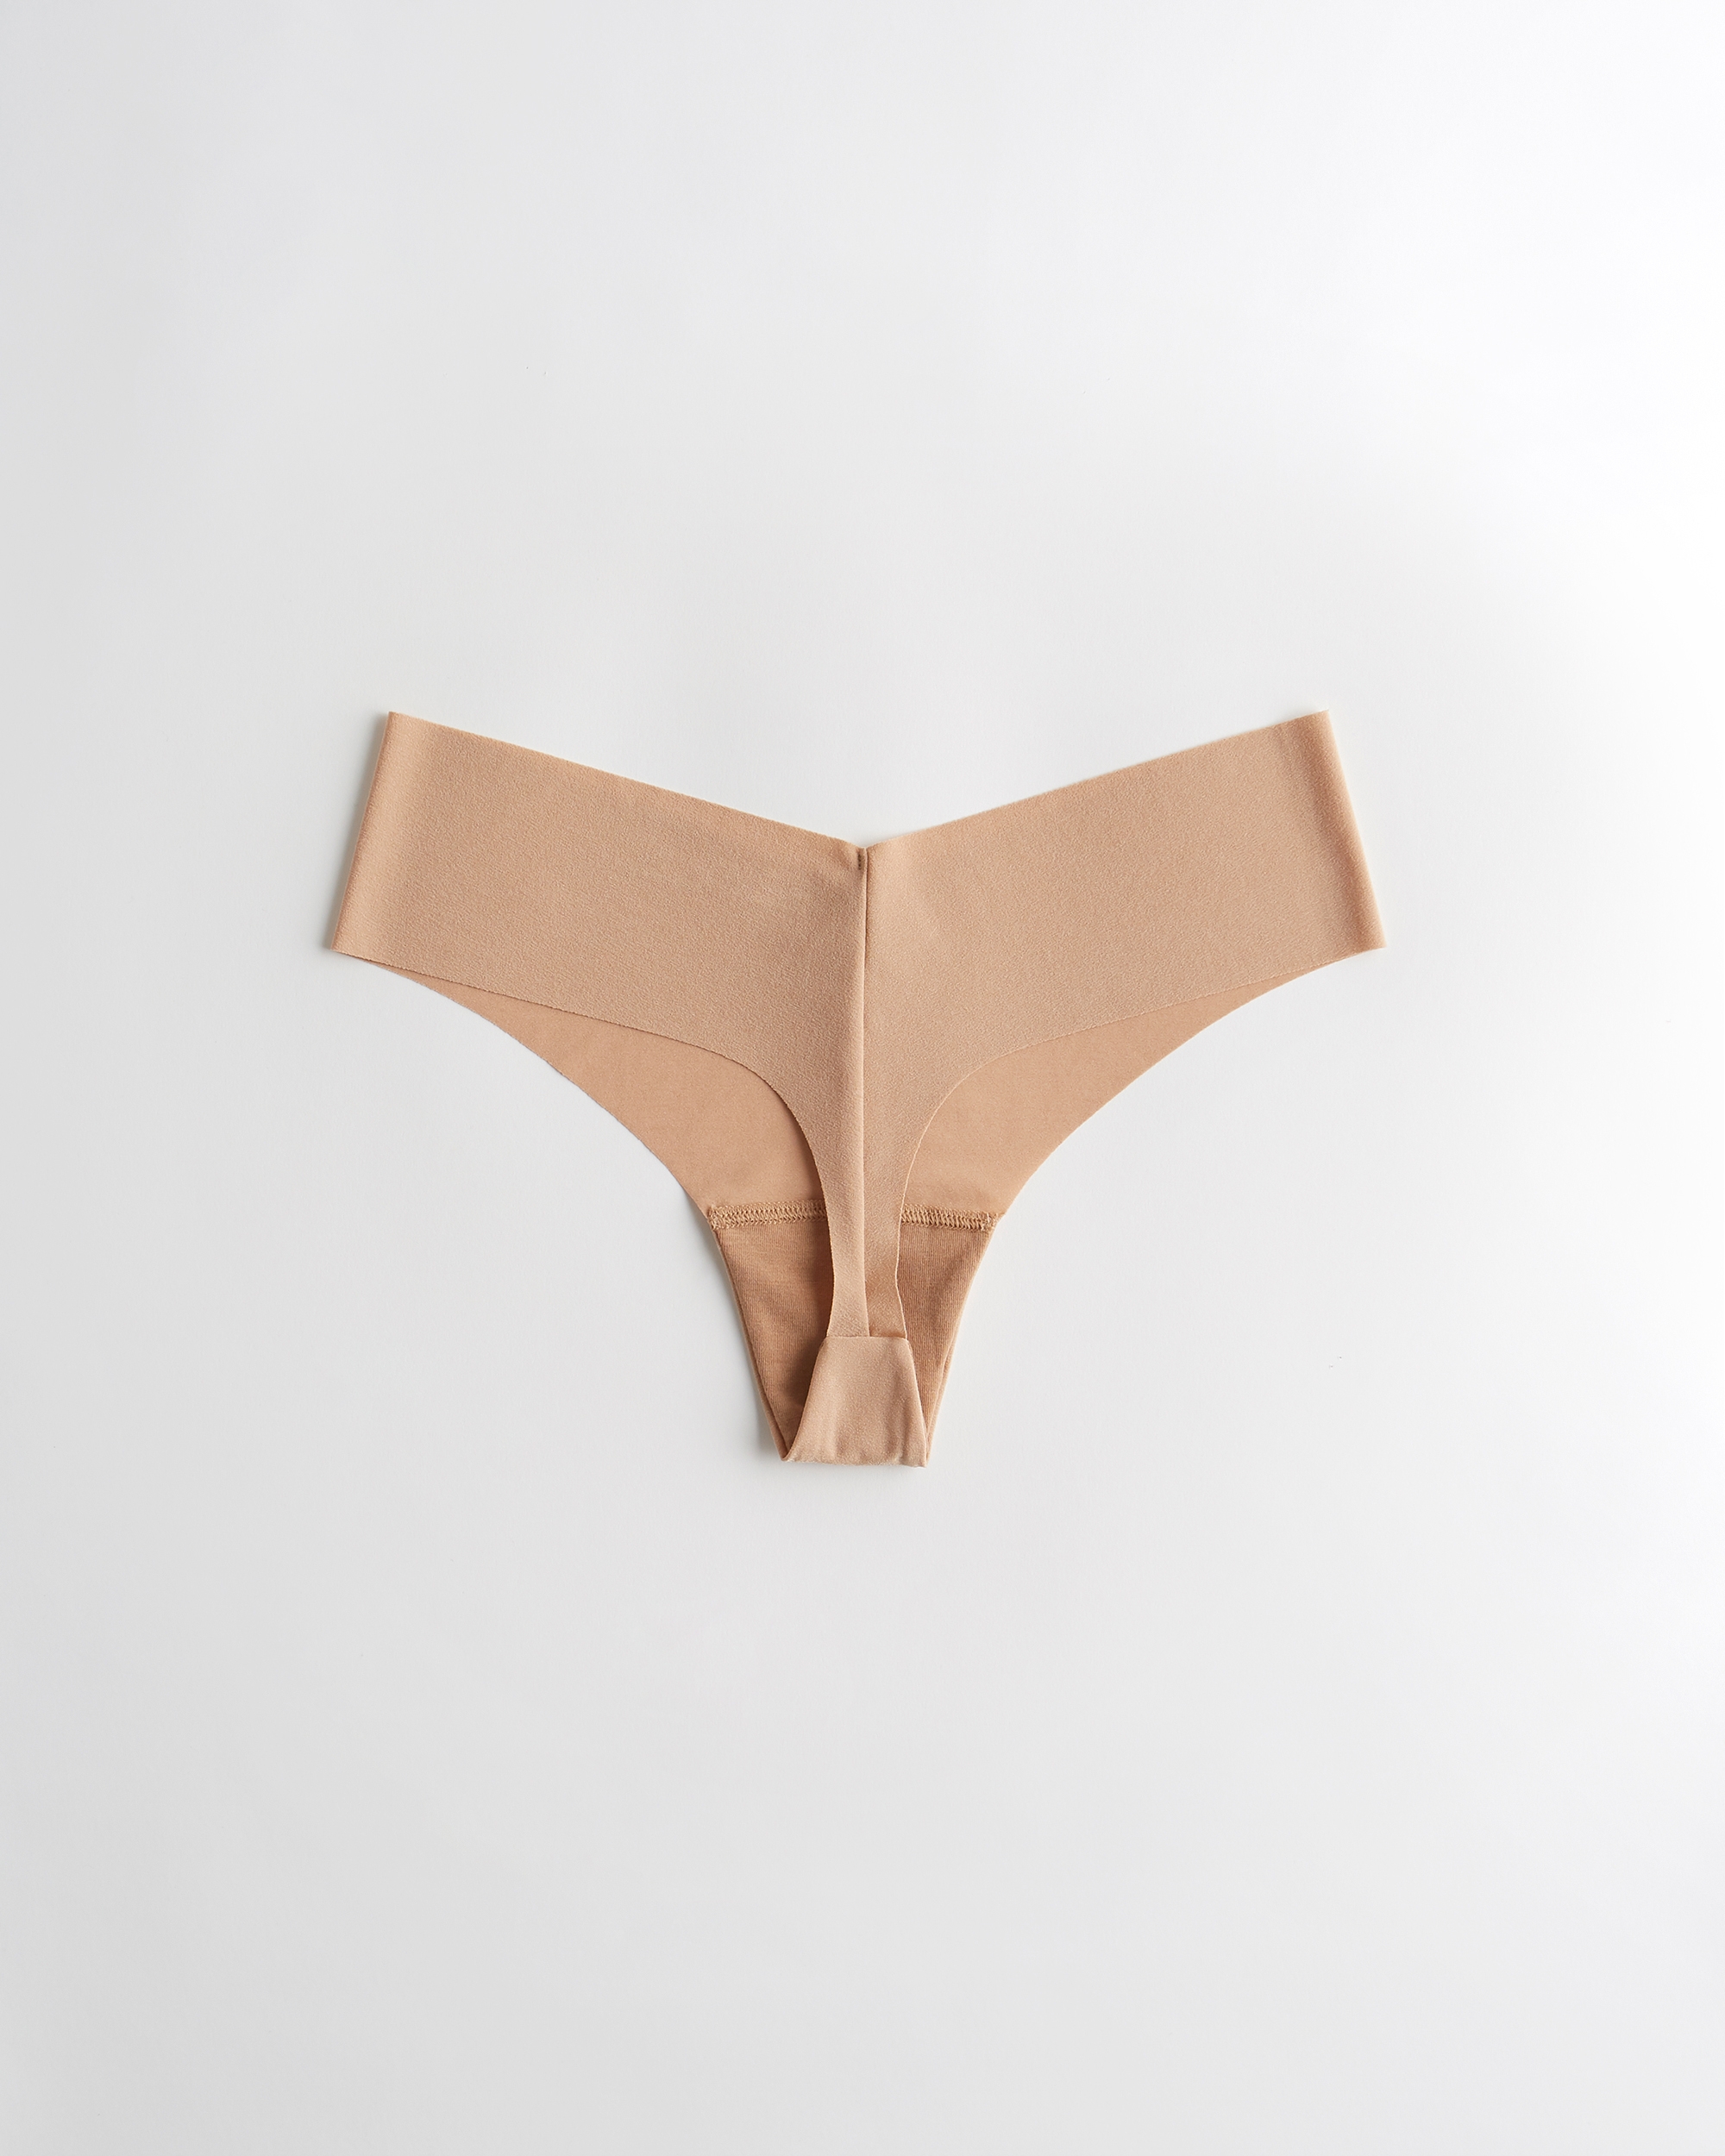 Gilly Hicks No-Show Thong Underwear